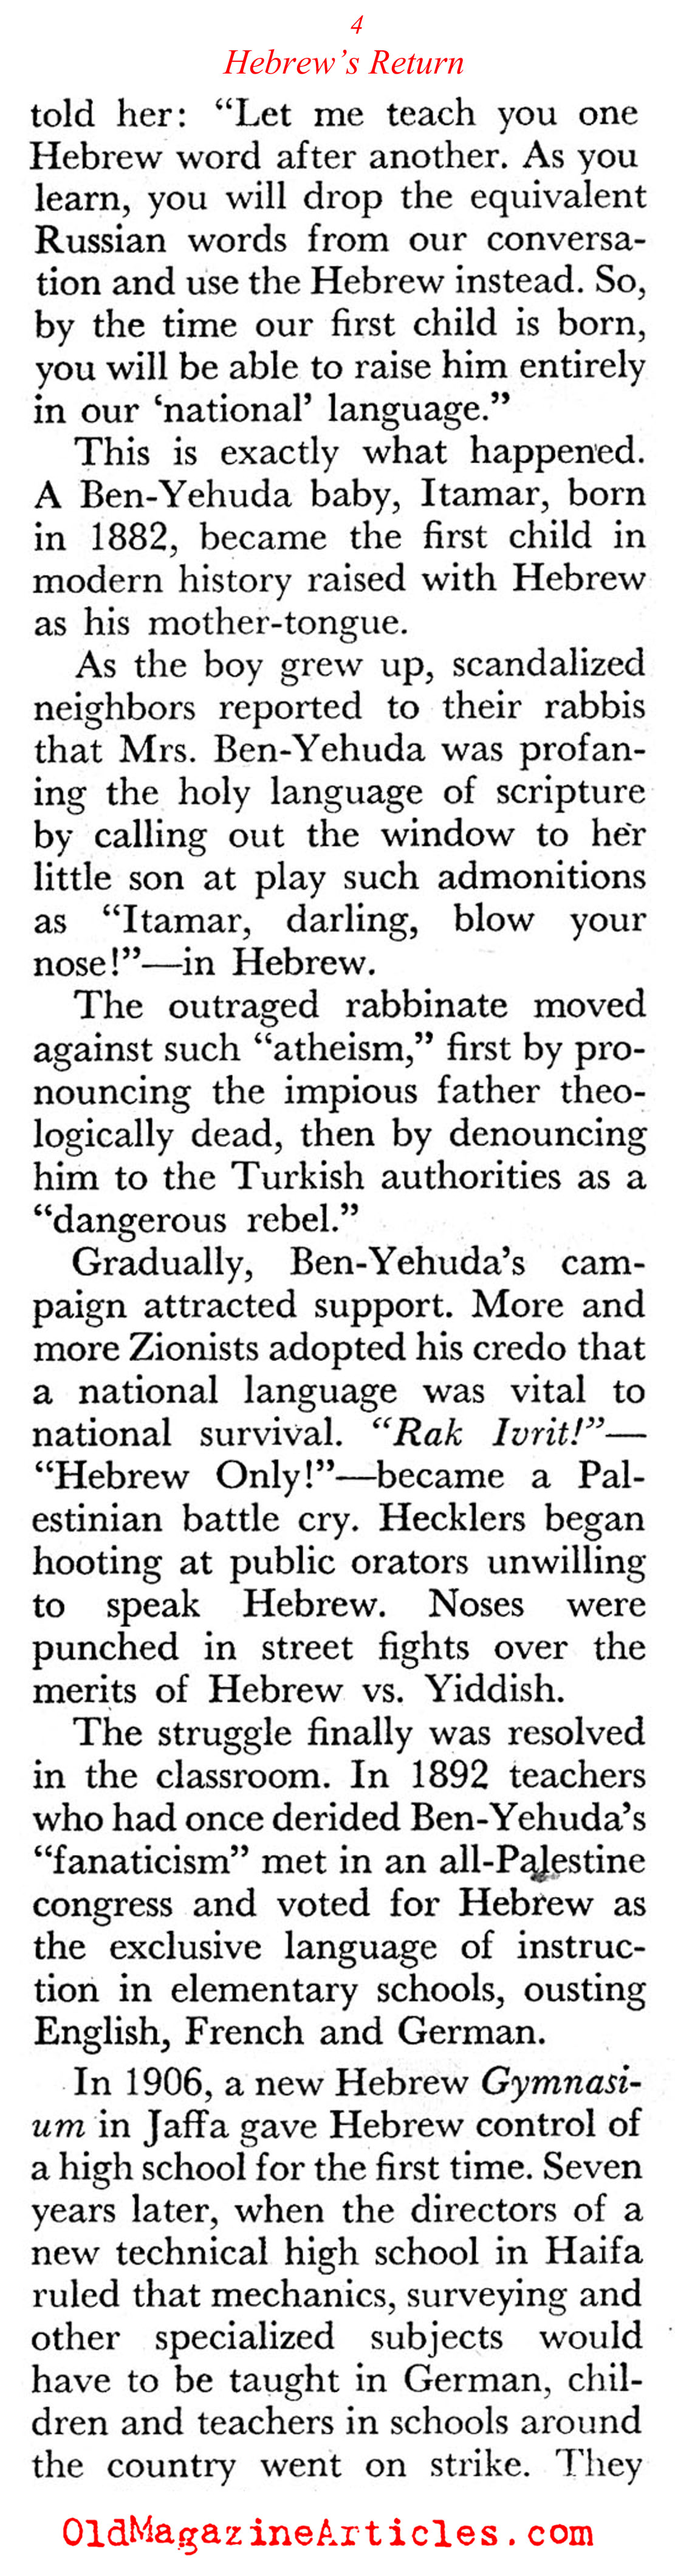 Adapting Hebrew for the Modern Age (Coronet Magazine, 1960)